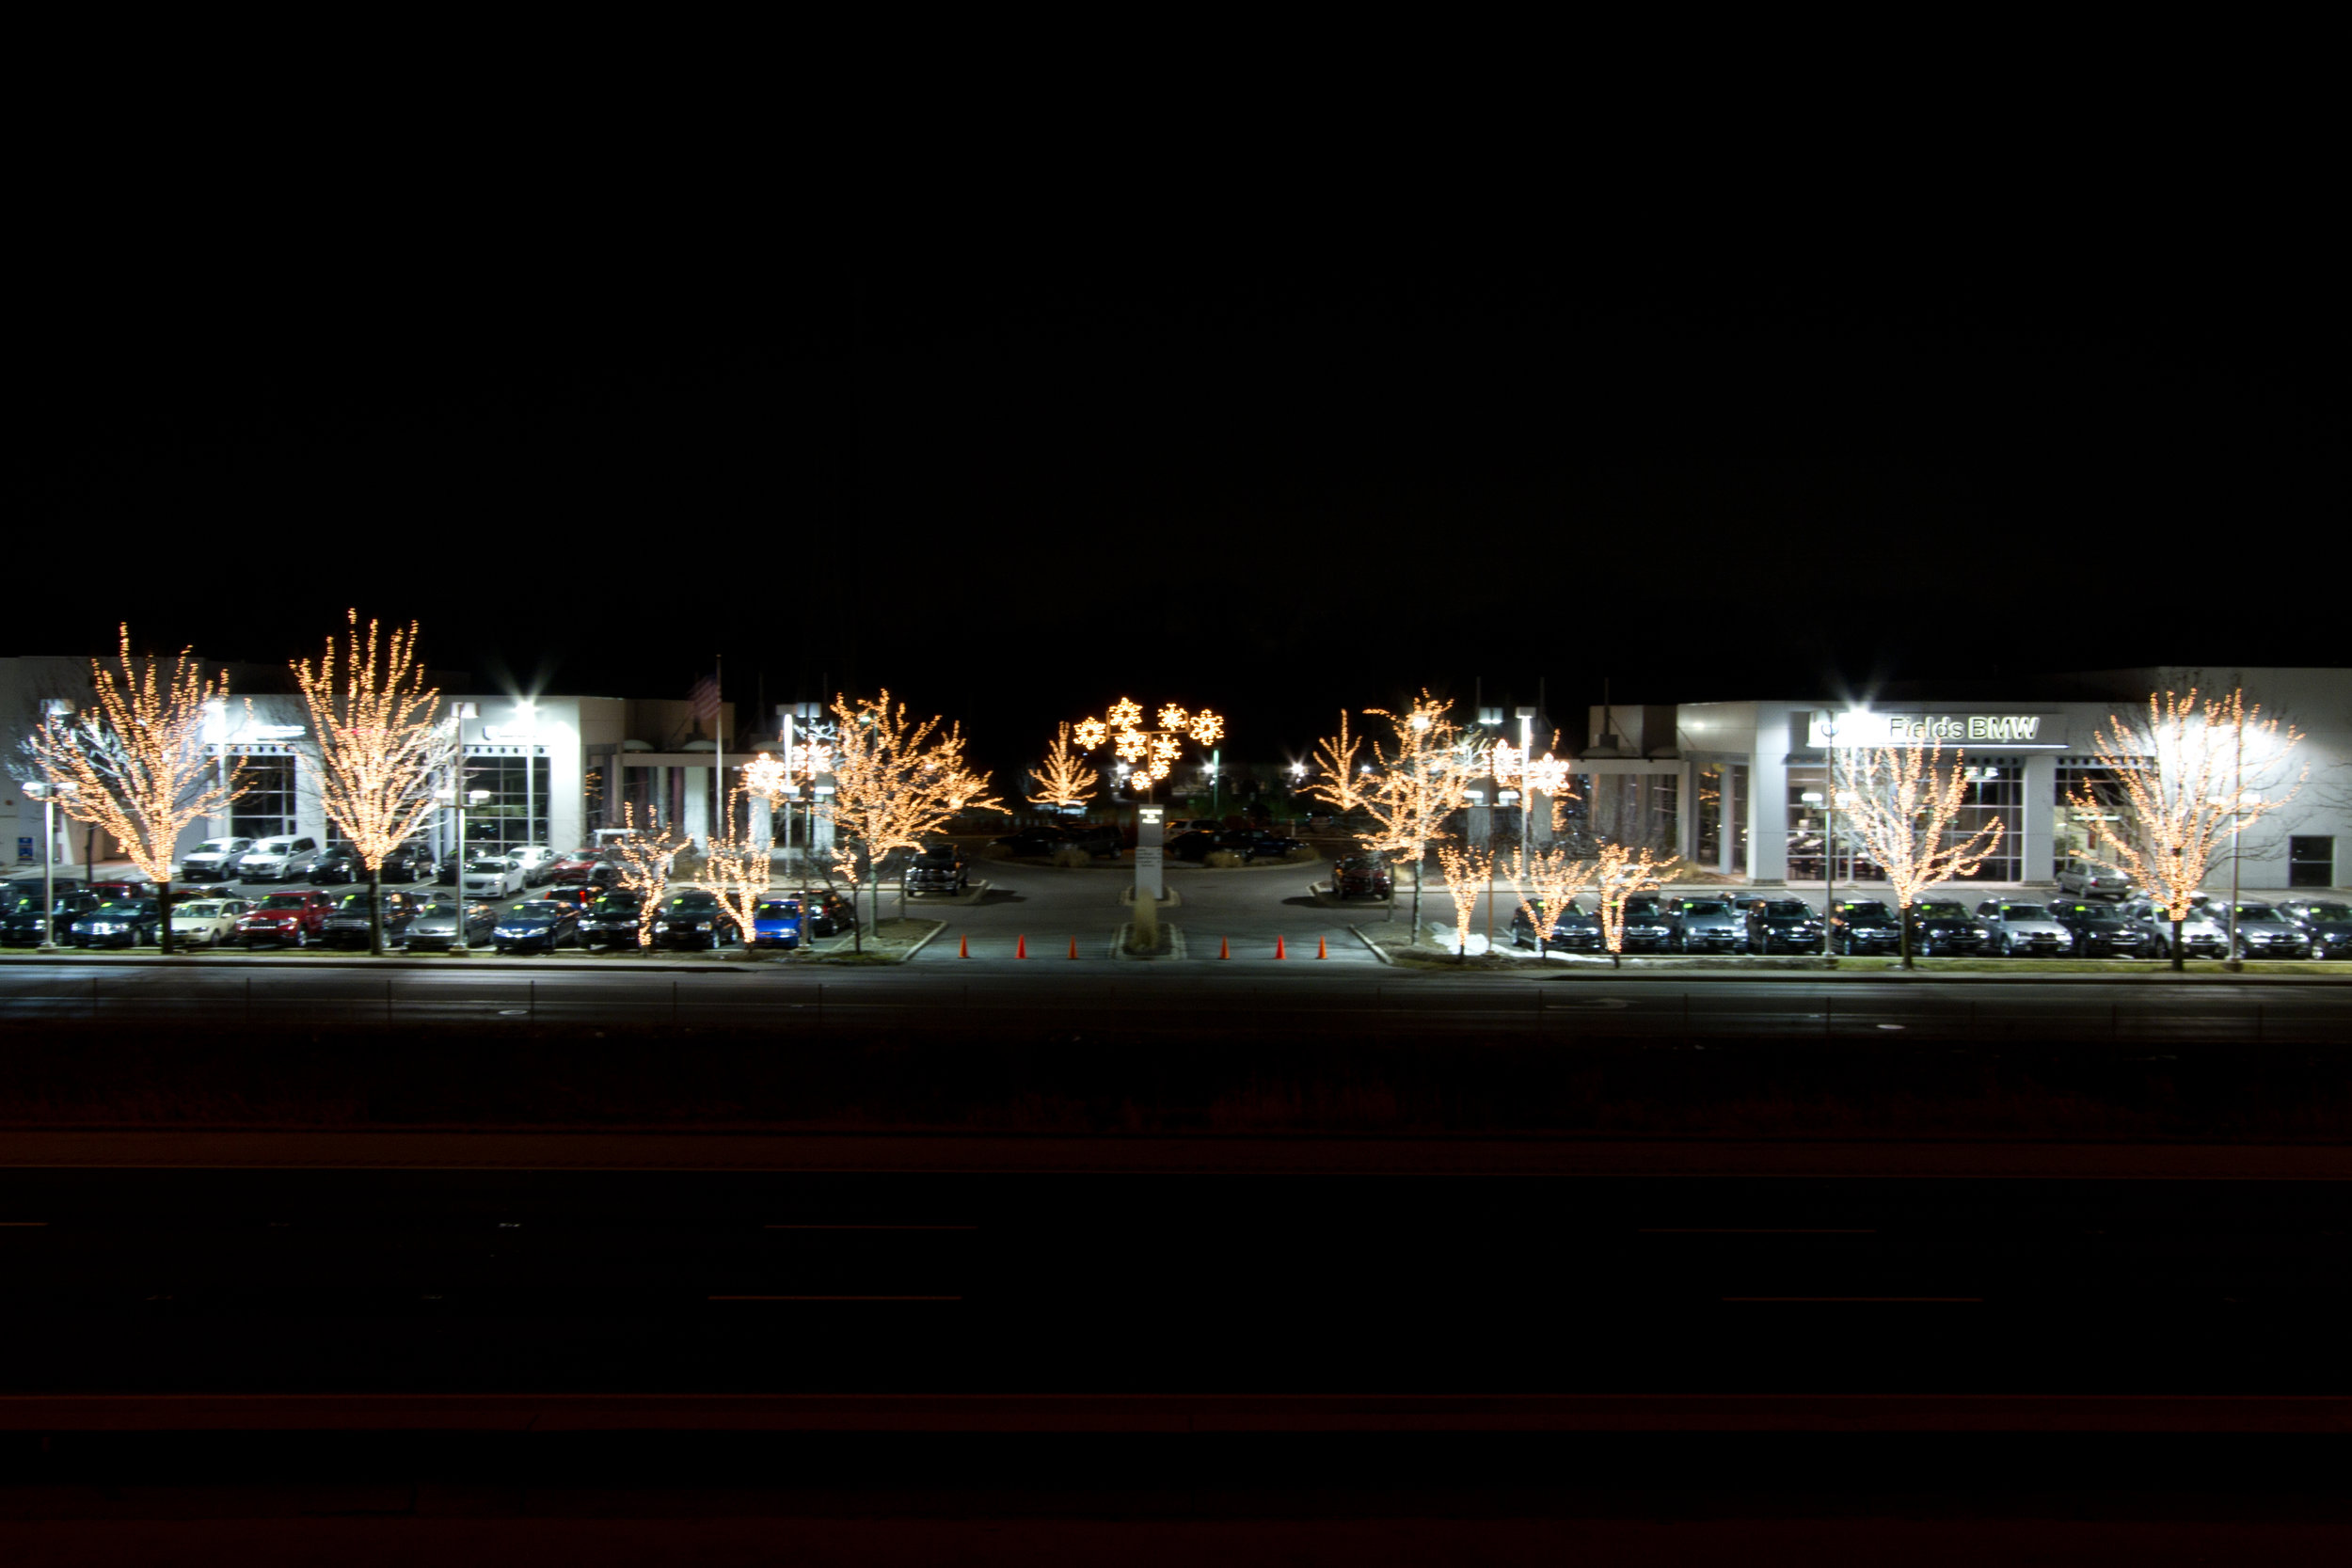 Commercial Holiday Lighting for Car Dealership